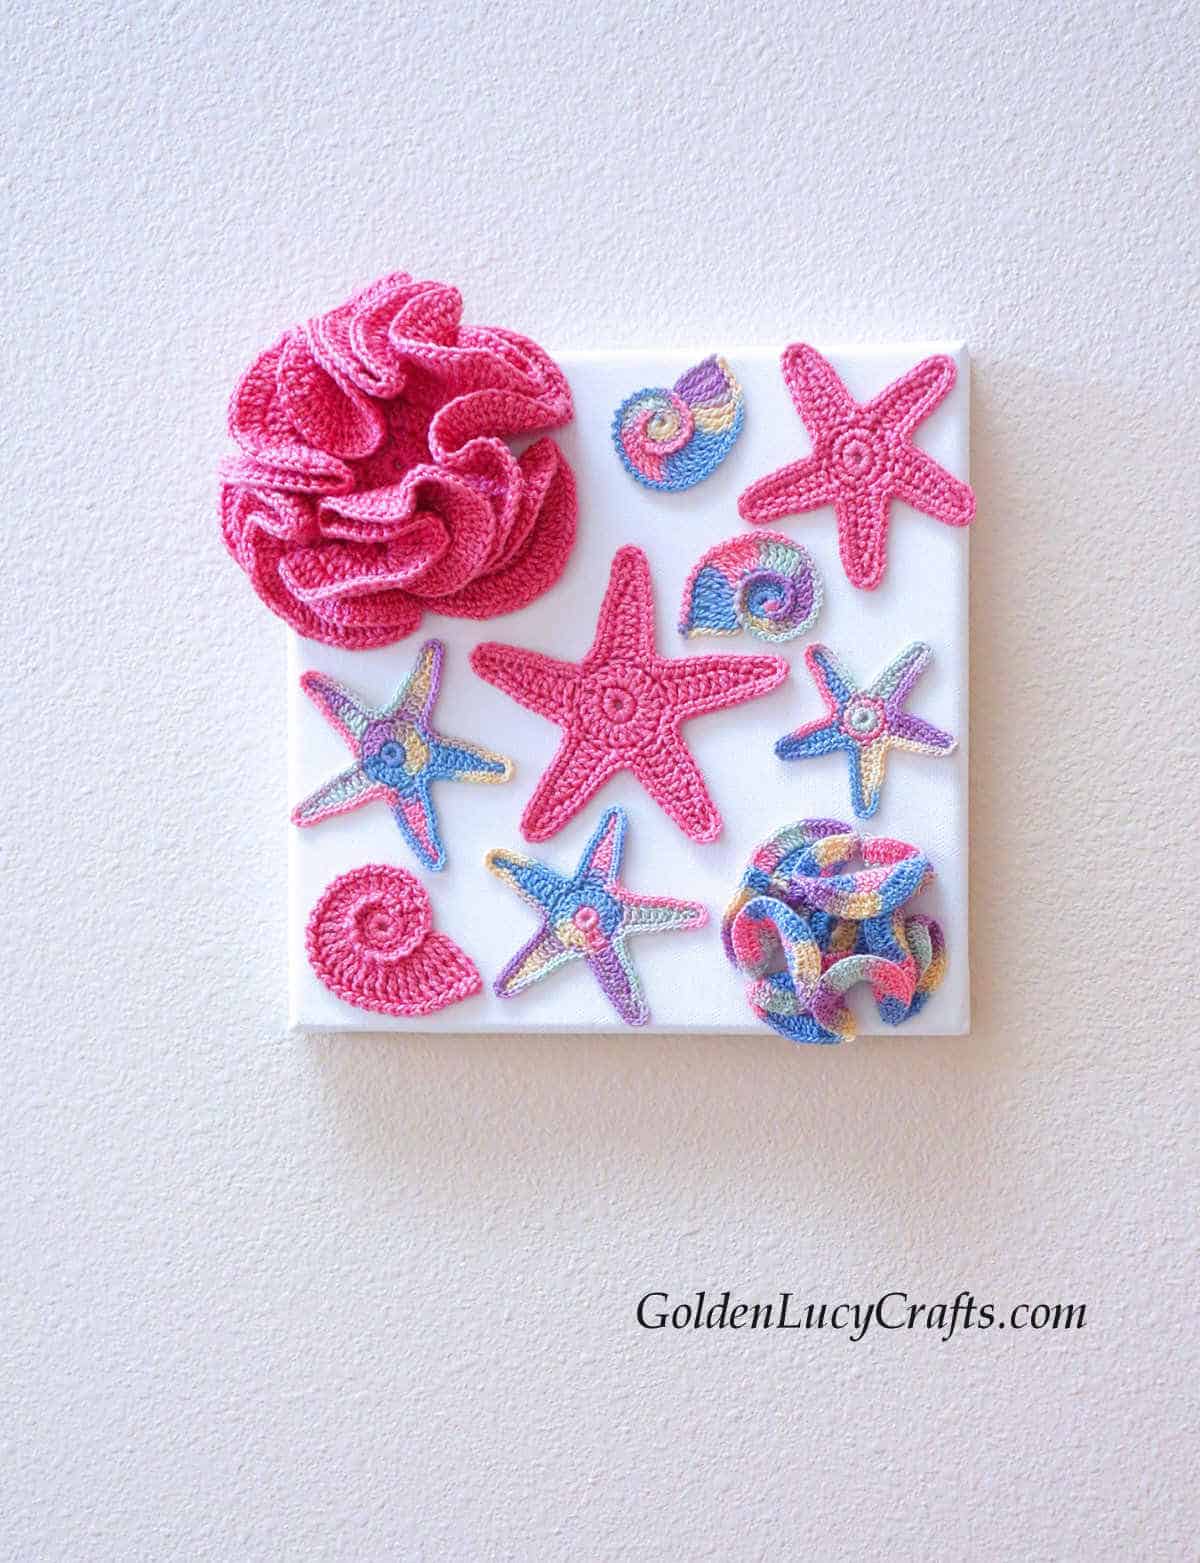 Crochet wall art pink and multicolored sea stars, corals.